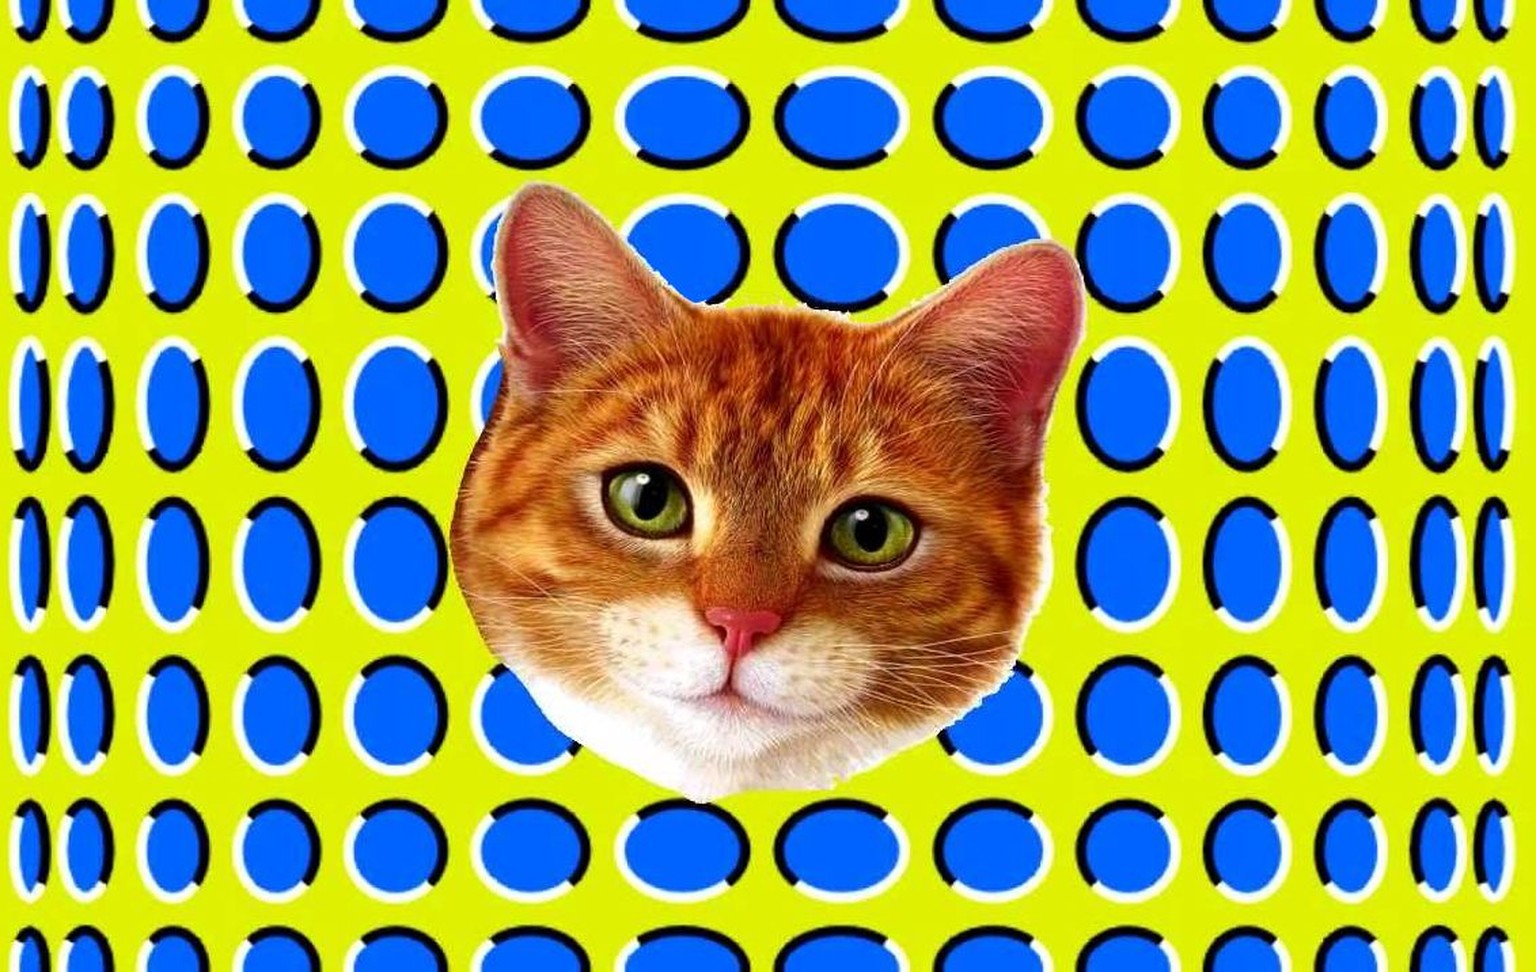 Optische Illusion Katze
http://www.jackwild.com/sites/default/files/images/trippy-expanding-cat-mobile-casino-i-haz-the-happy-feels.jpg